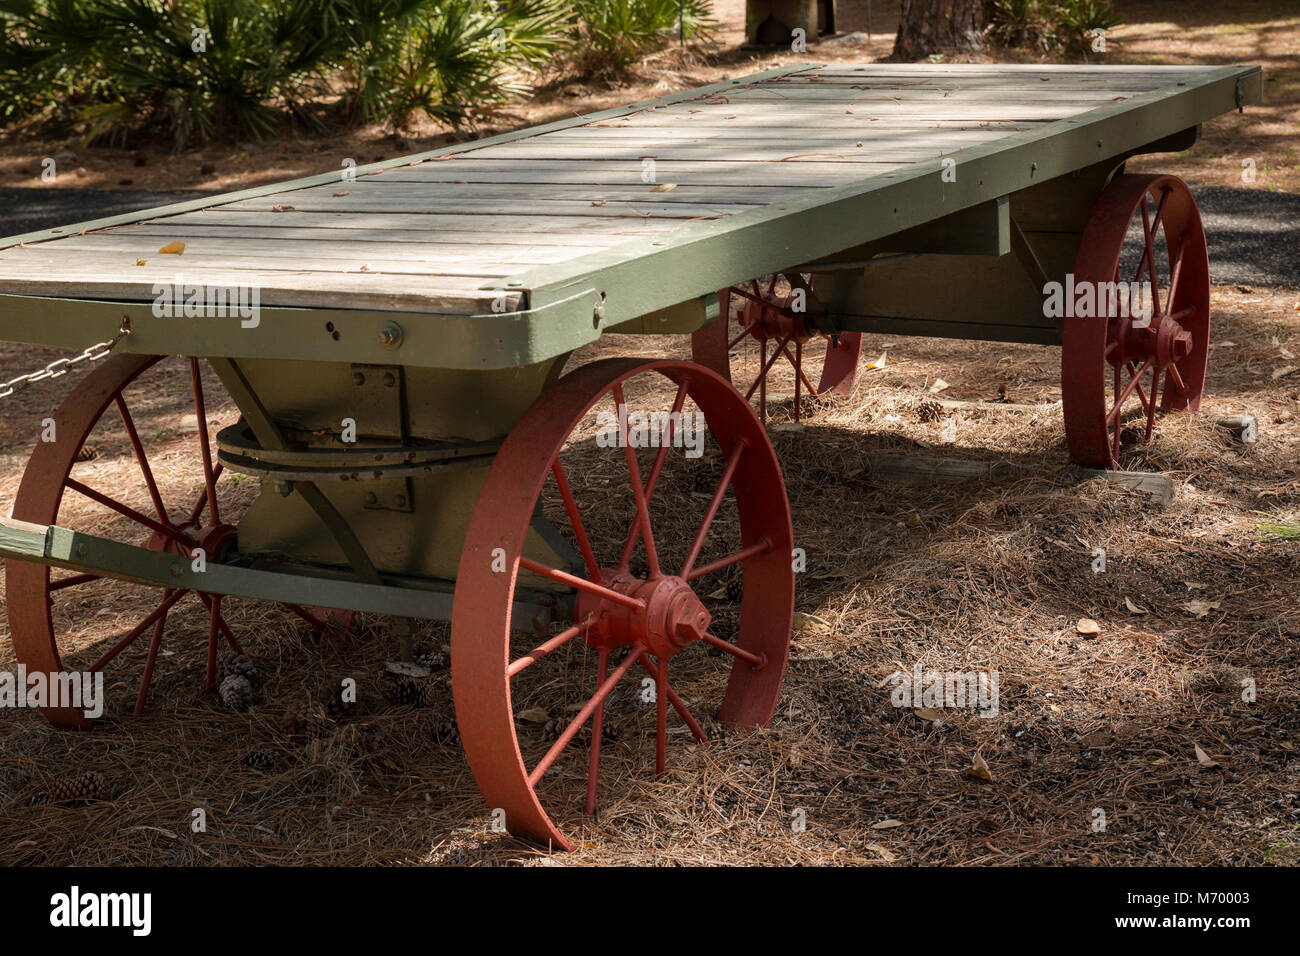 Antique flatbed trailer on metal wheel rims, Sawgrass Lake Park, Florida Stock Photo